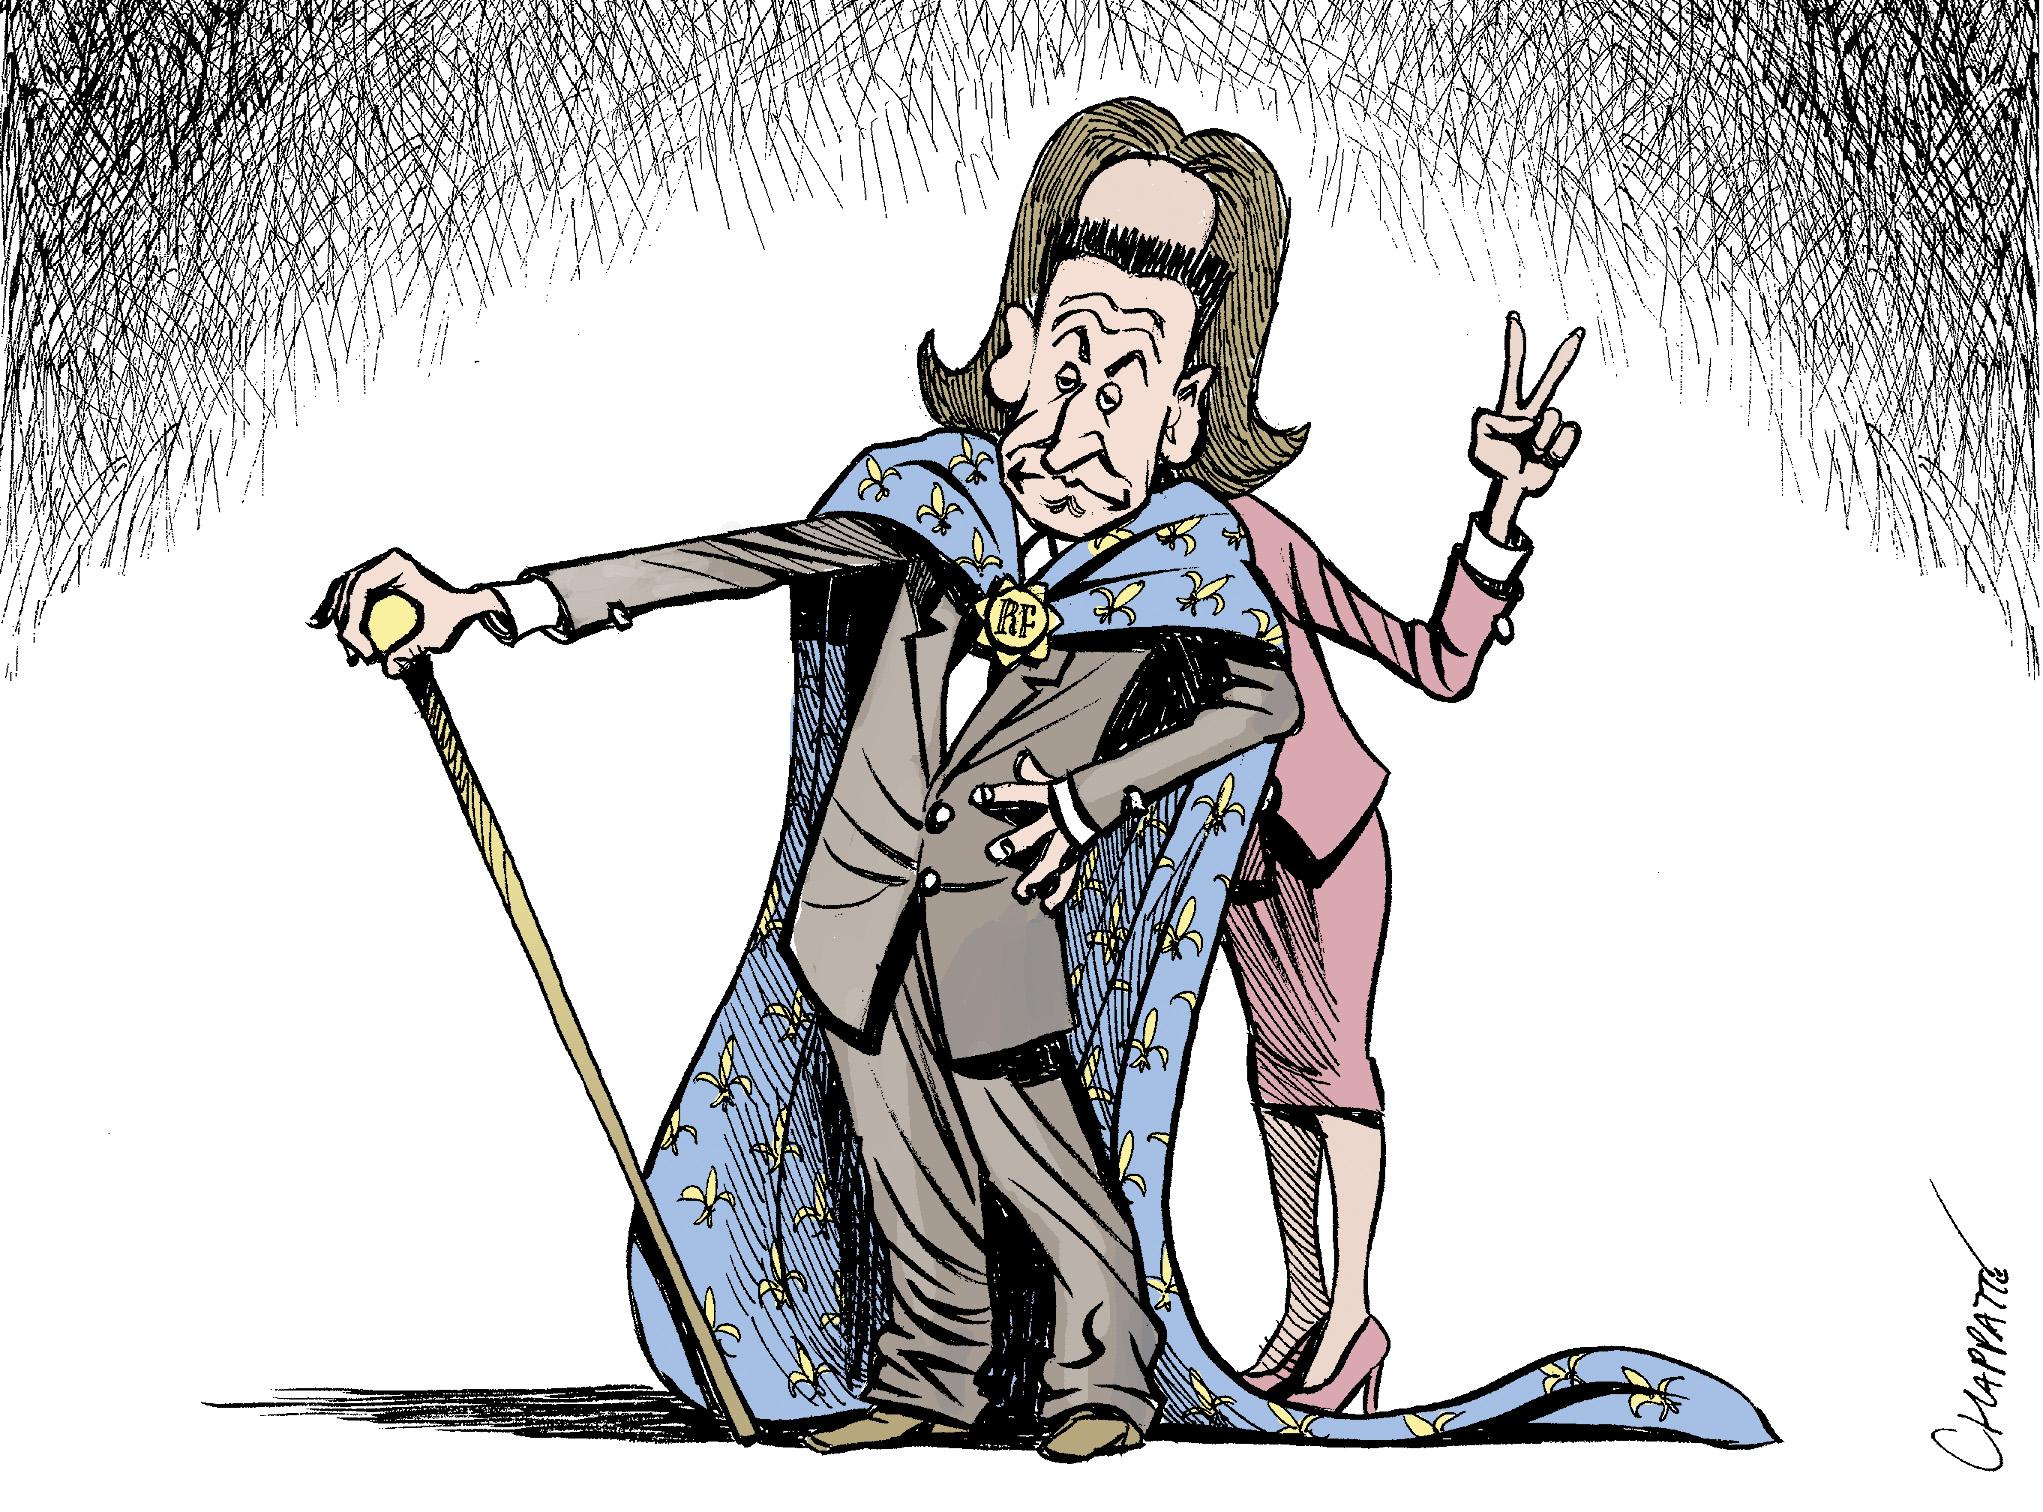 Sarkozy royal